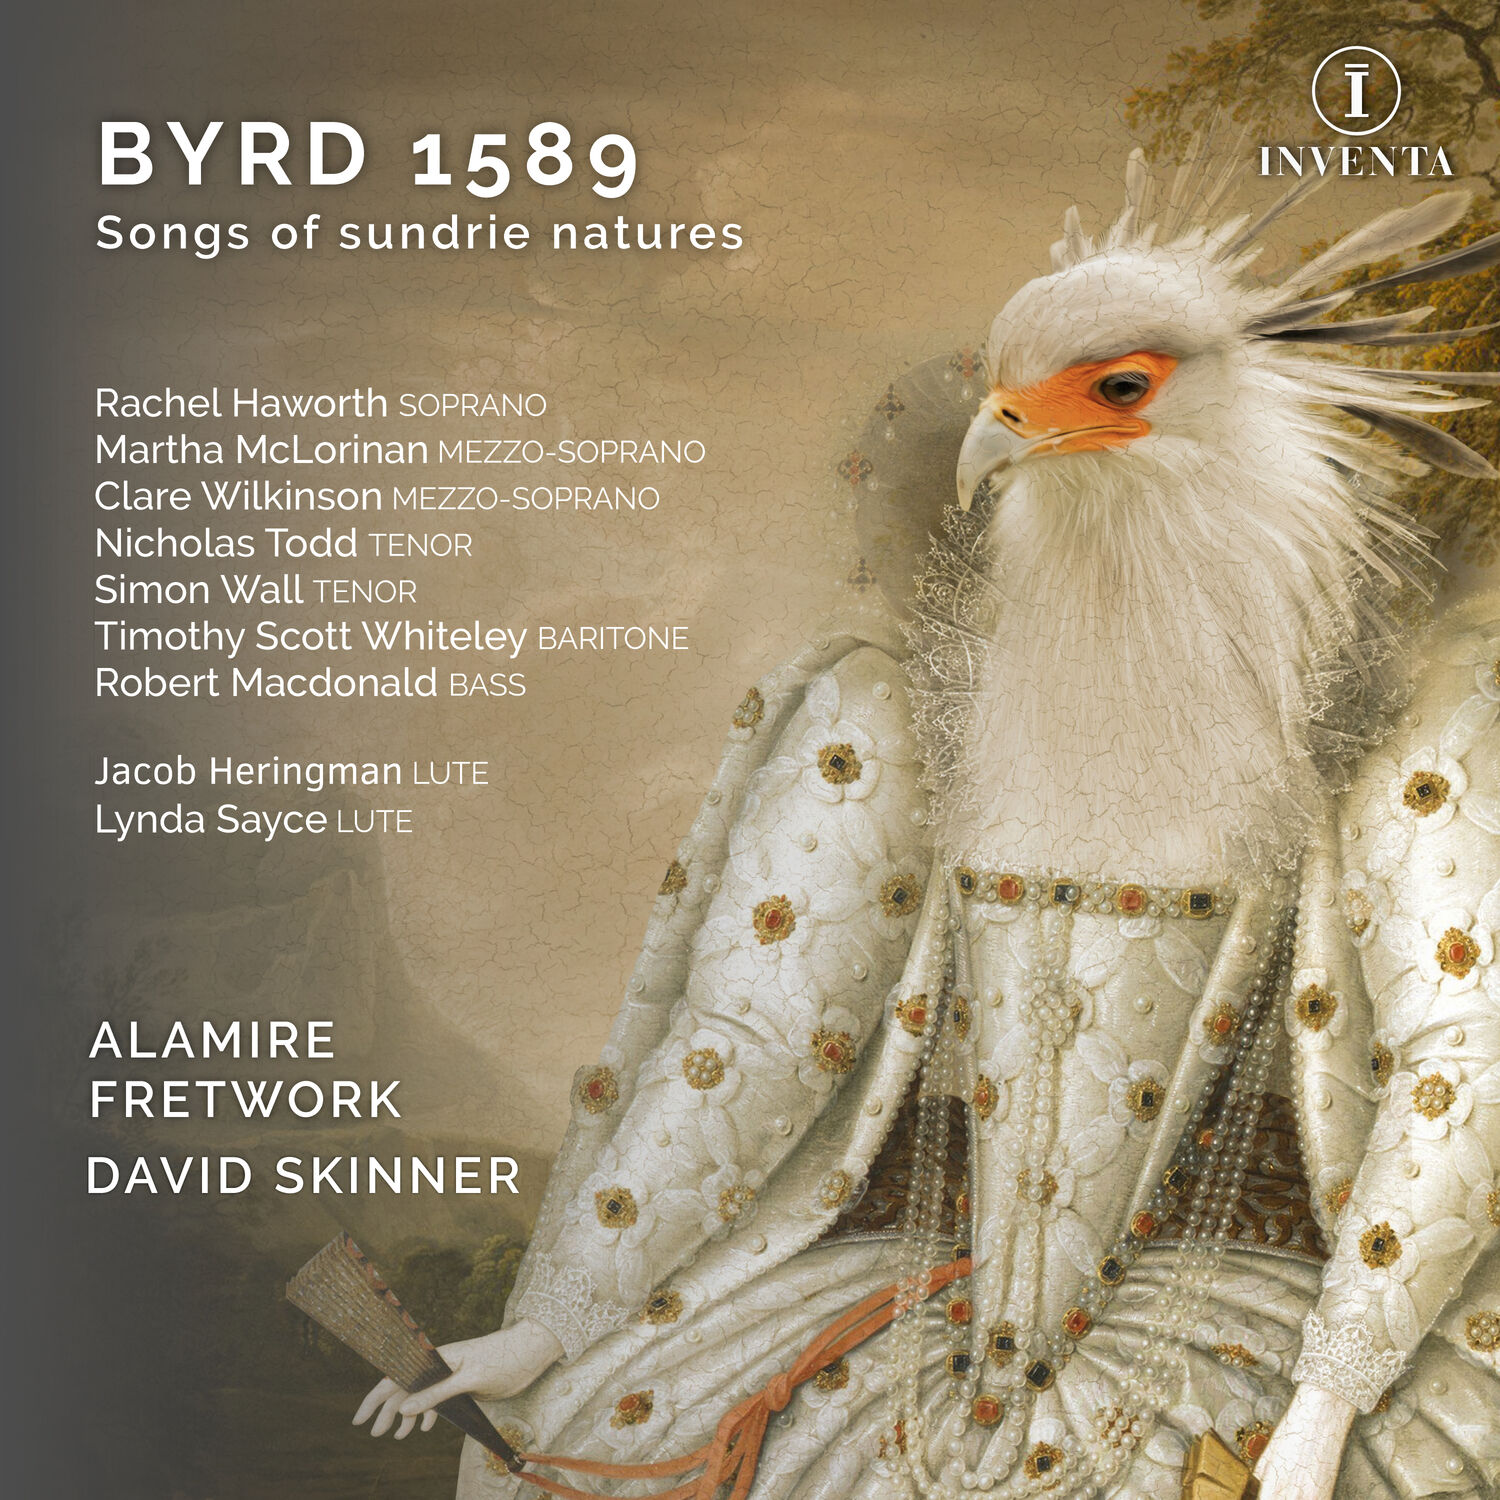 Byrd - 1589 - Fretwork, David Skinner, Alamire 2cd